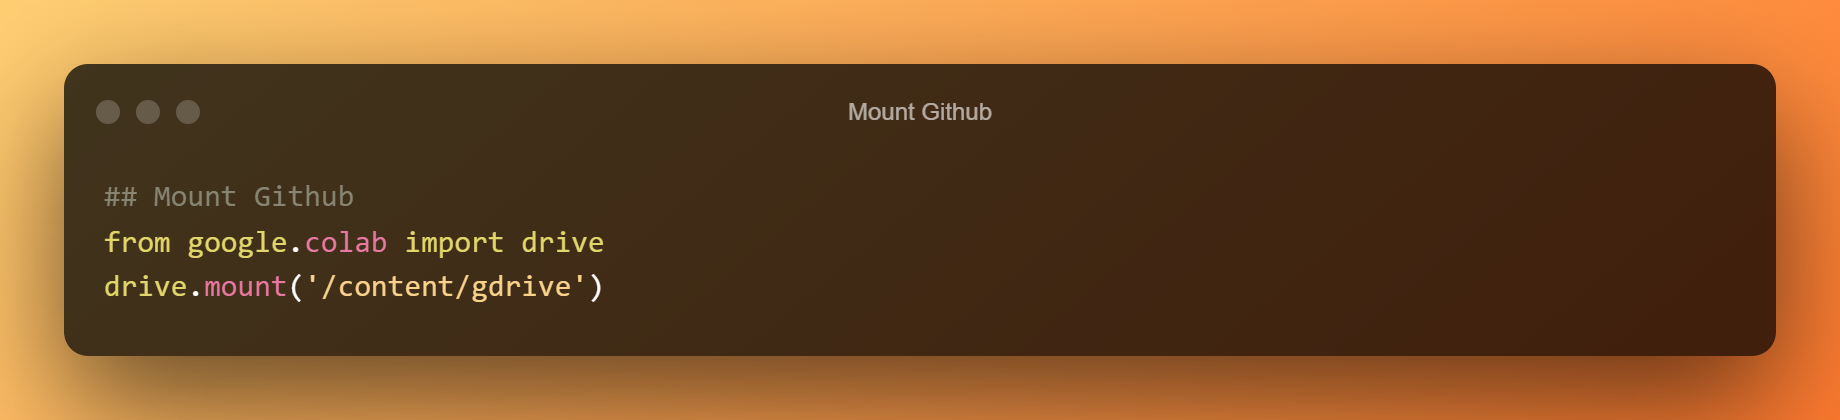 Monte Github